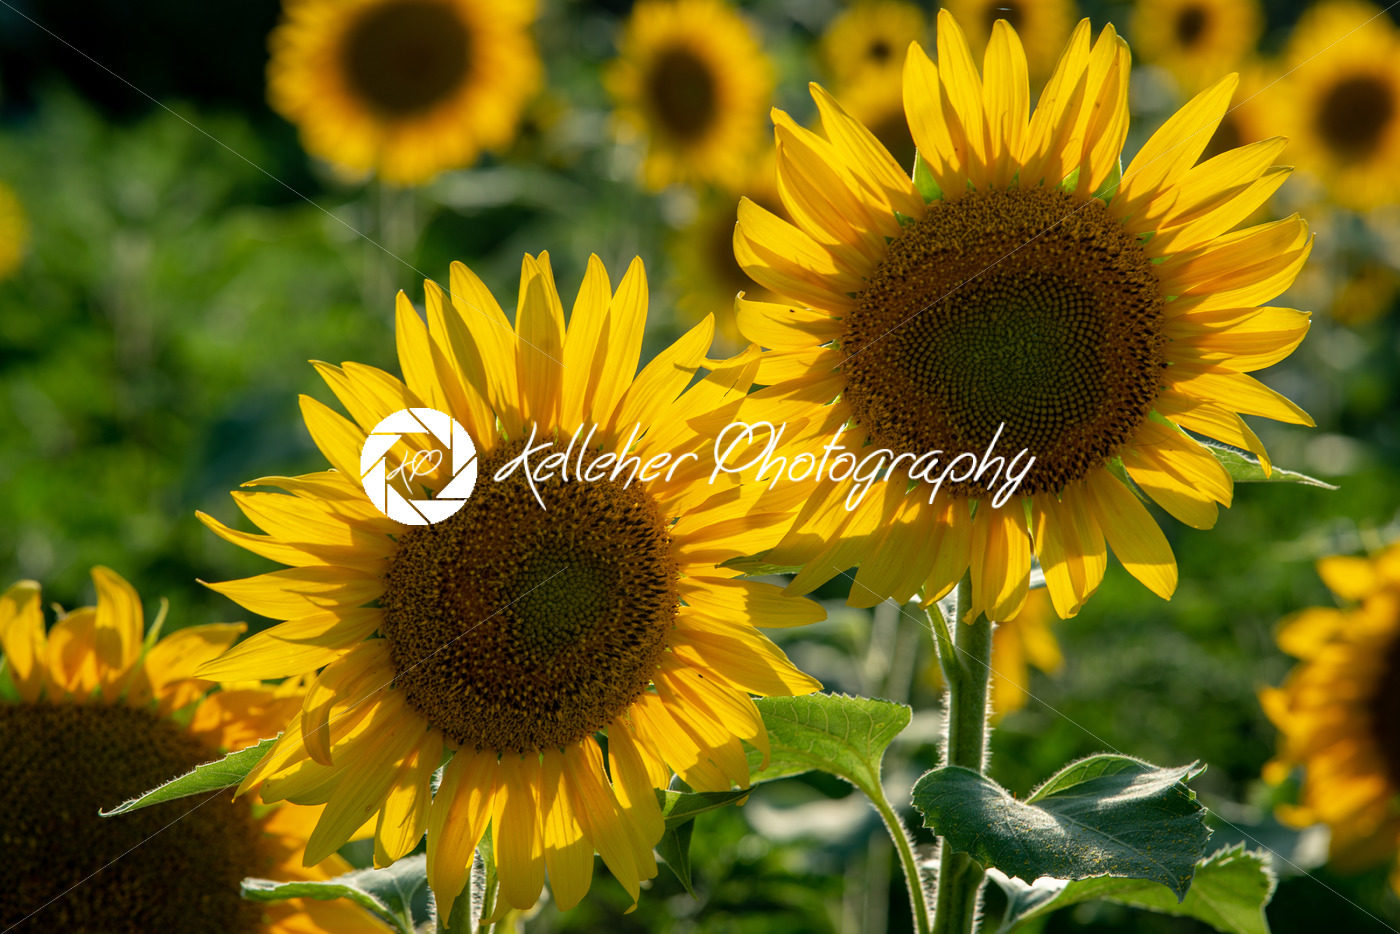 Sun flower Field during sunset hour - Kelleher Photography Store